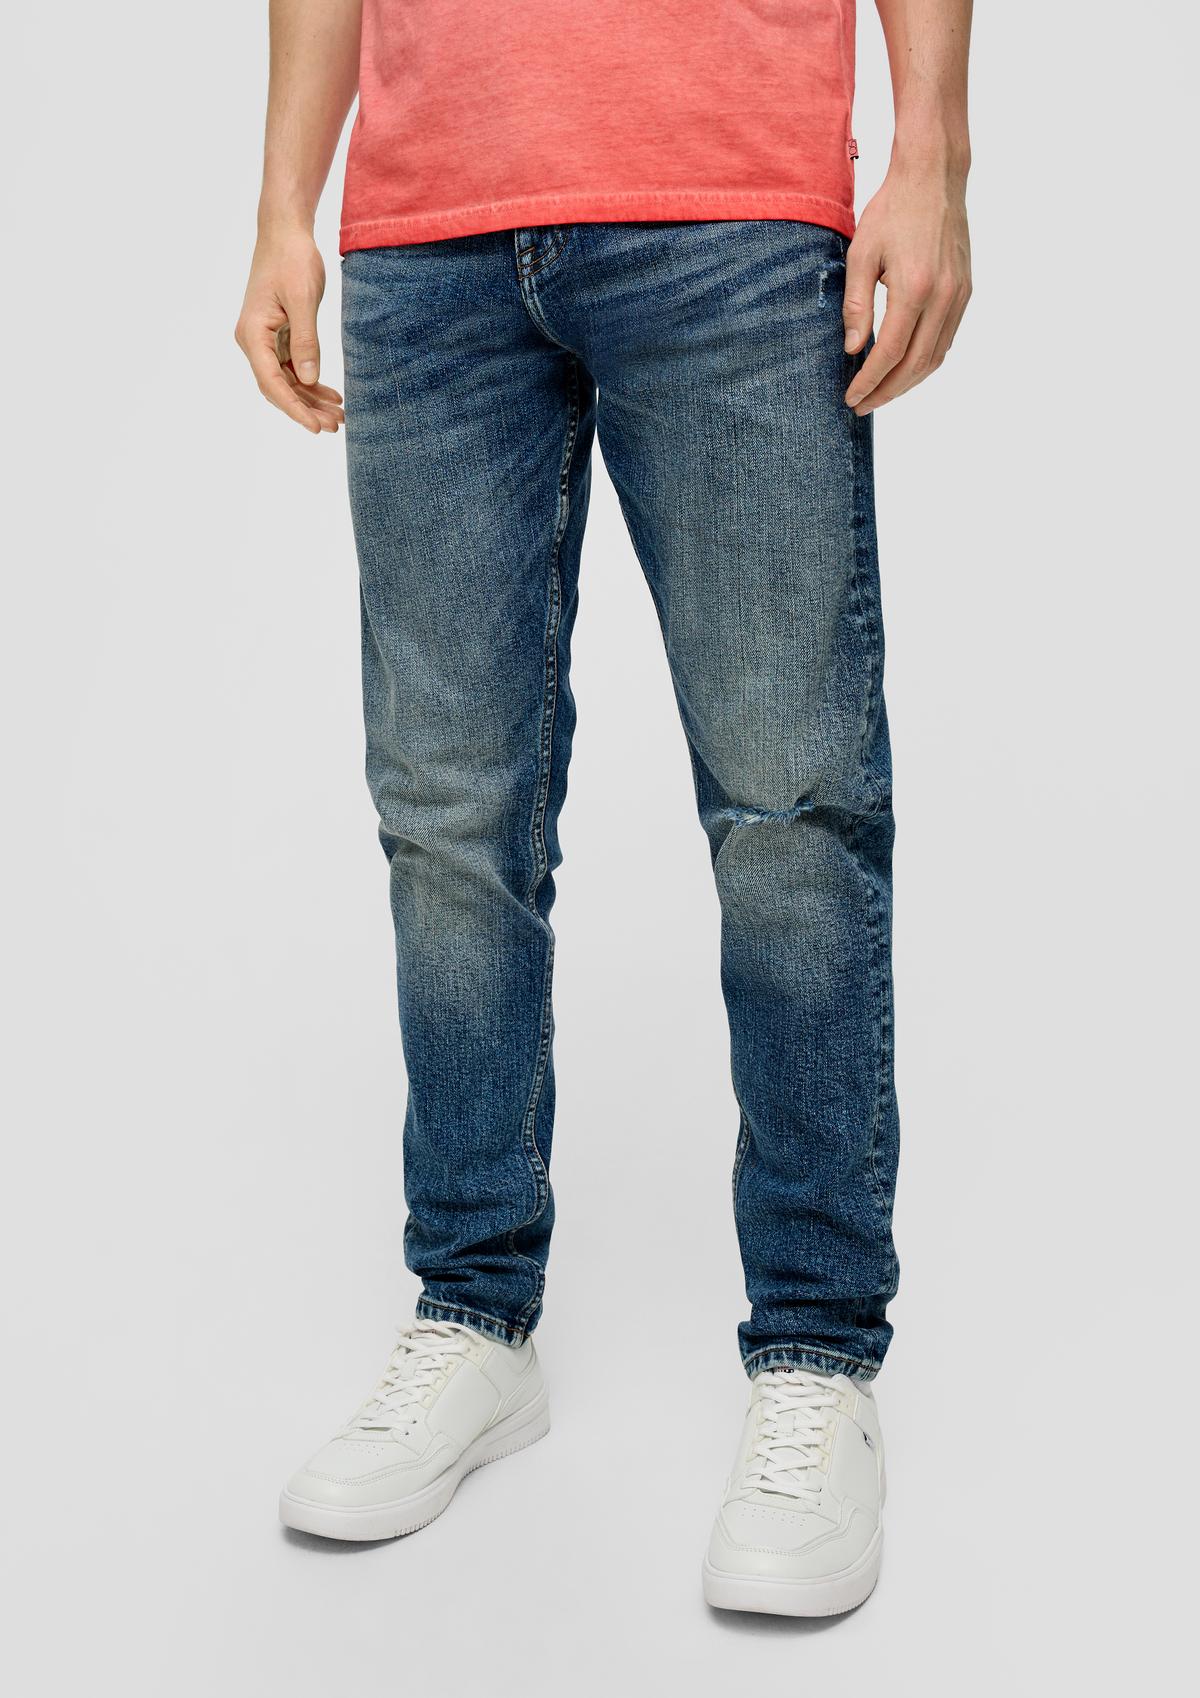 s.Oliver Jeans Shawn / Regular Fit / Mid Rise / Slim Leg